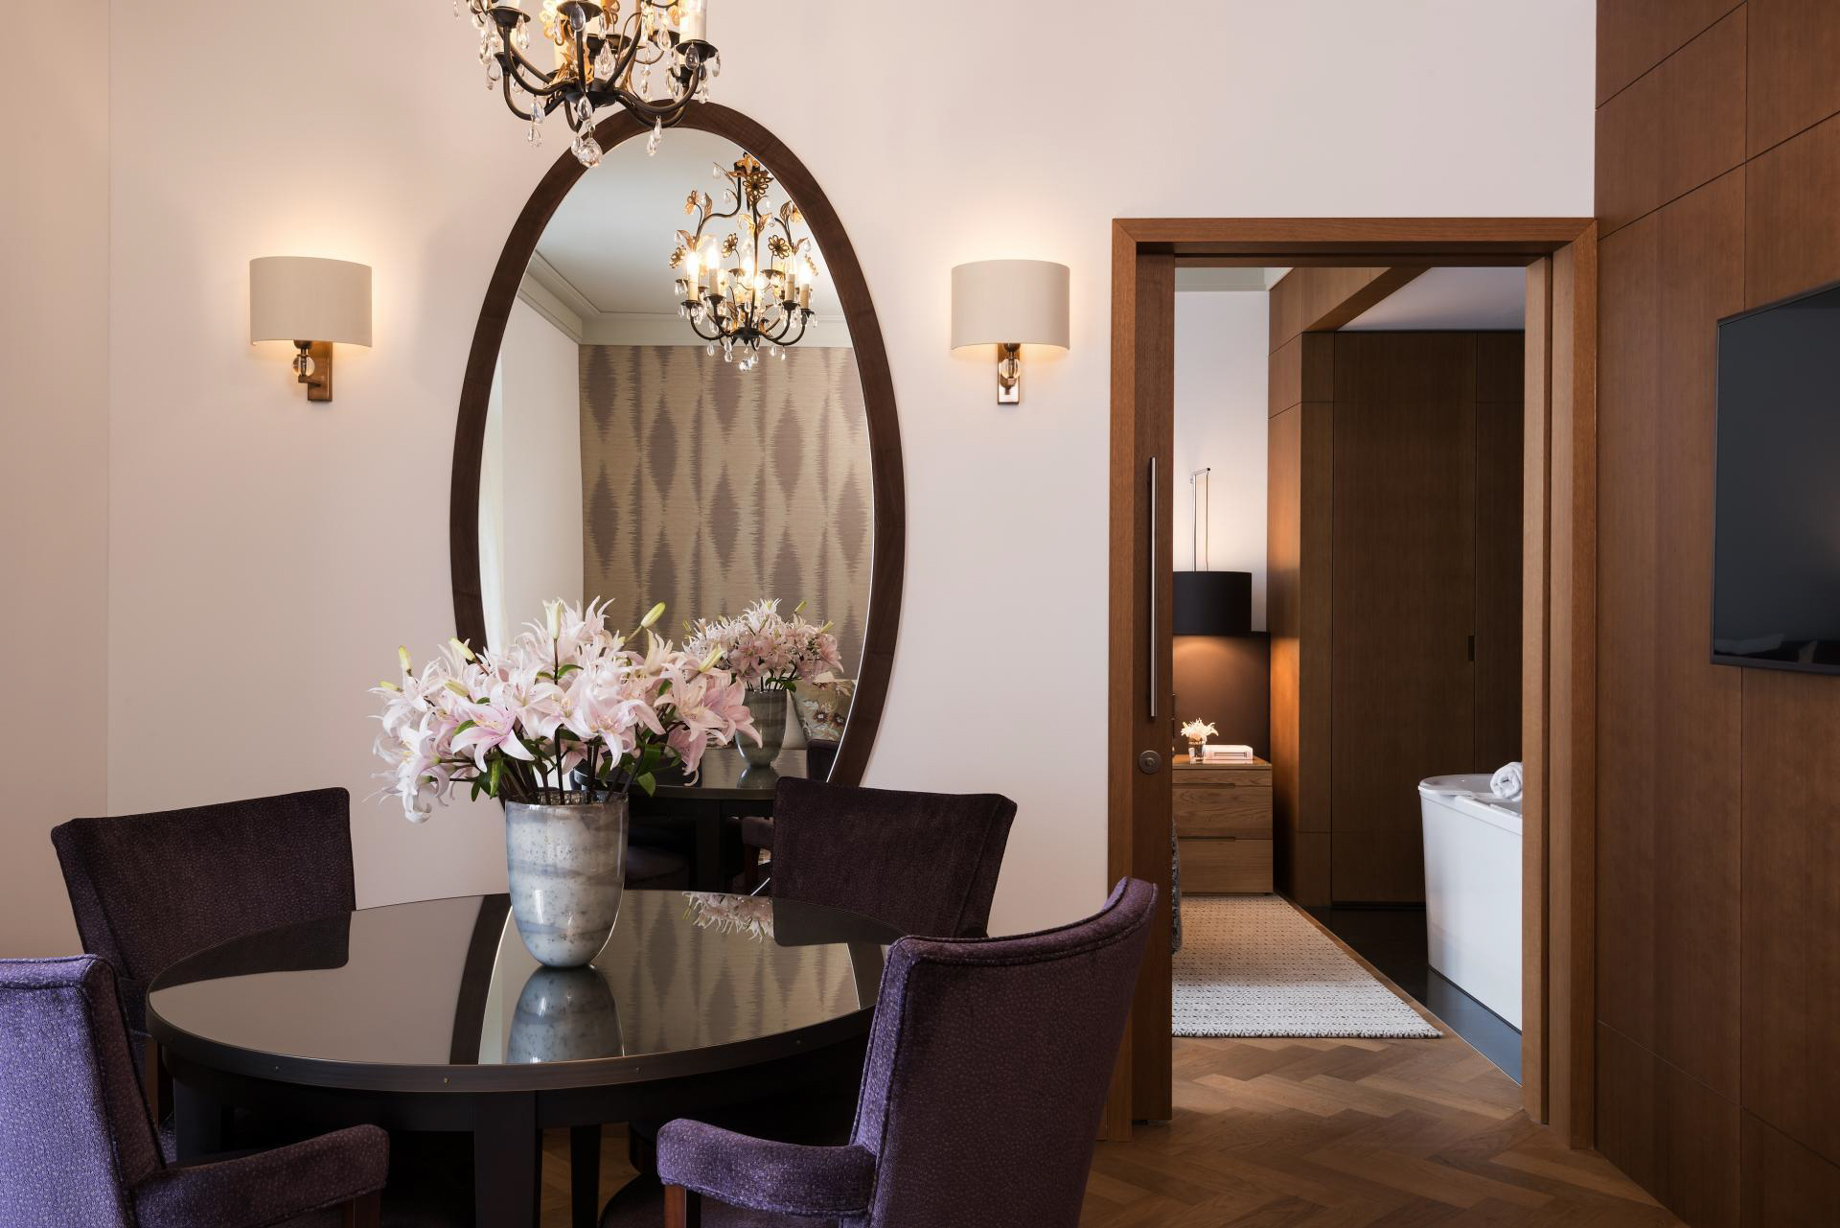 Palace Hotel – Burgenstock Hotels & Resort – Obburgen, Switzerland – Palace Lakeview Suite Bedroom View